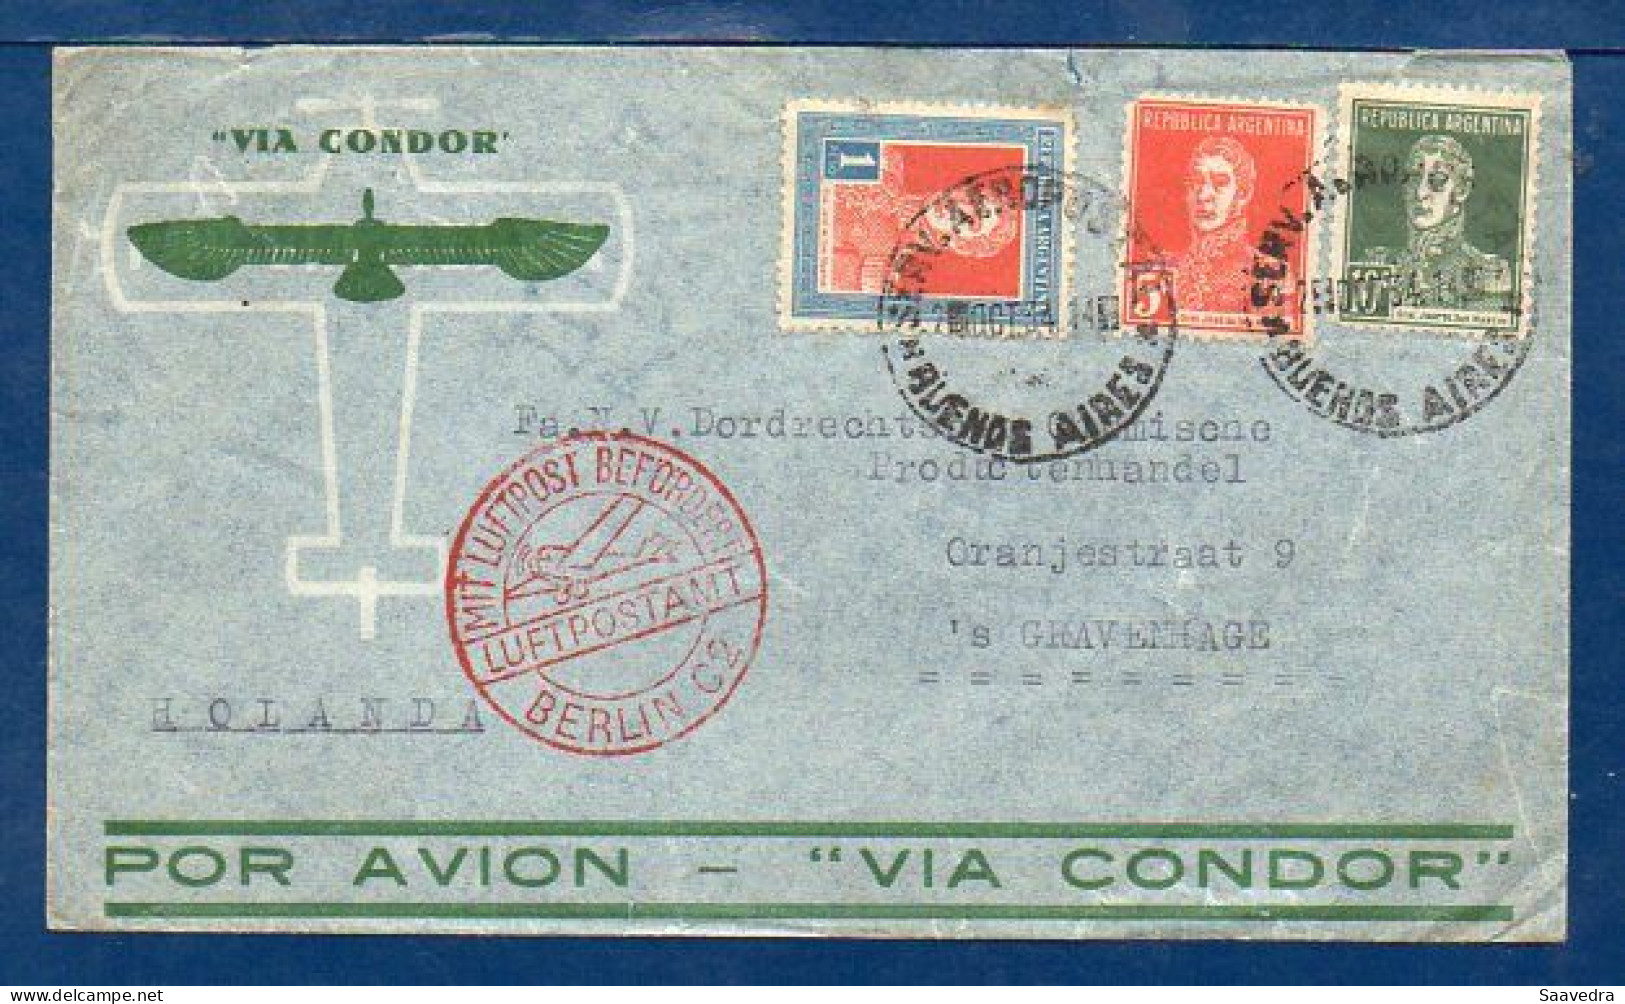 Argentina To Netherland, 1935, Via ZEPPELIN Flight G-409, SEE DESCRIPTION   (050) - Aéreo